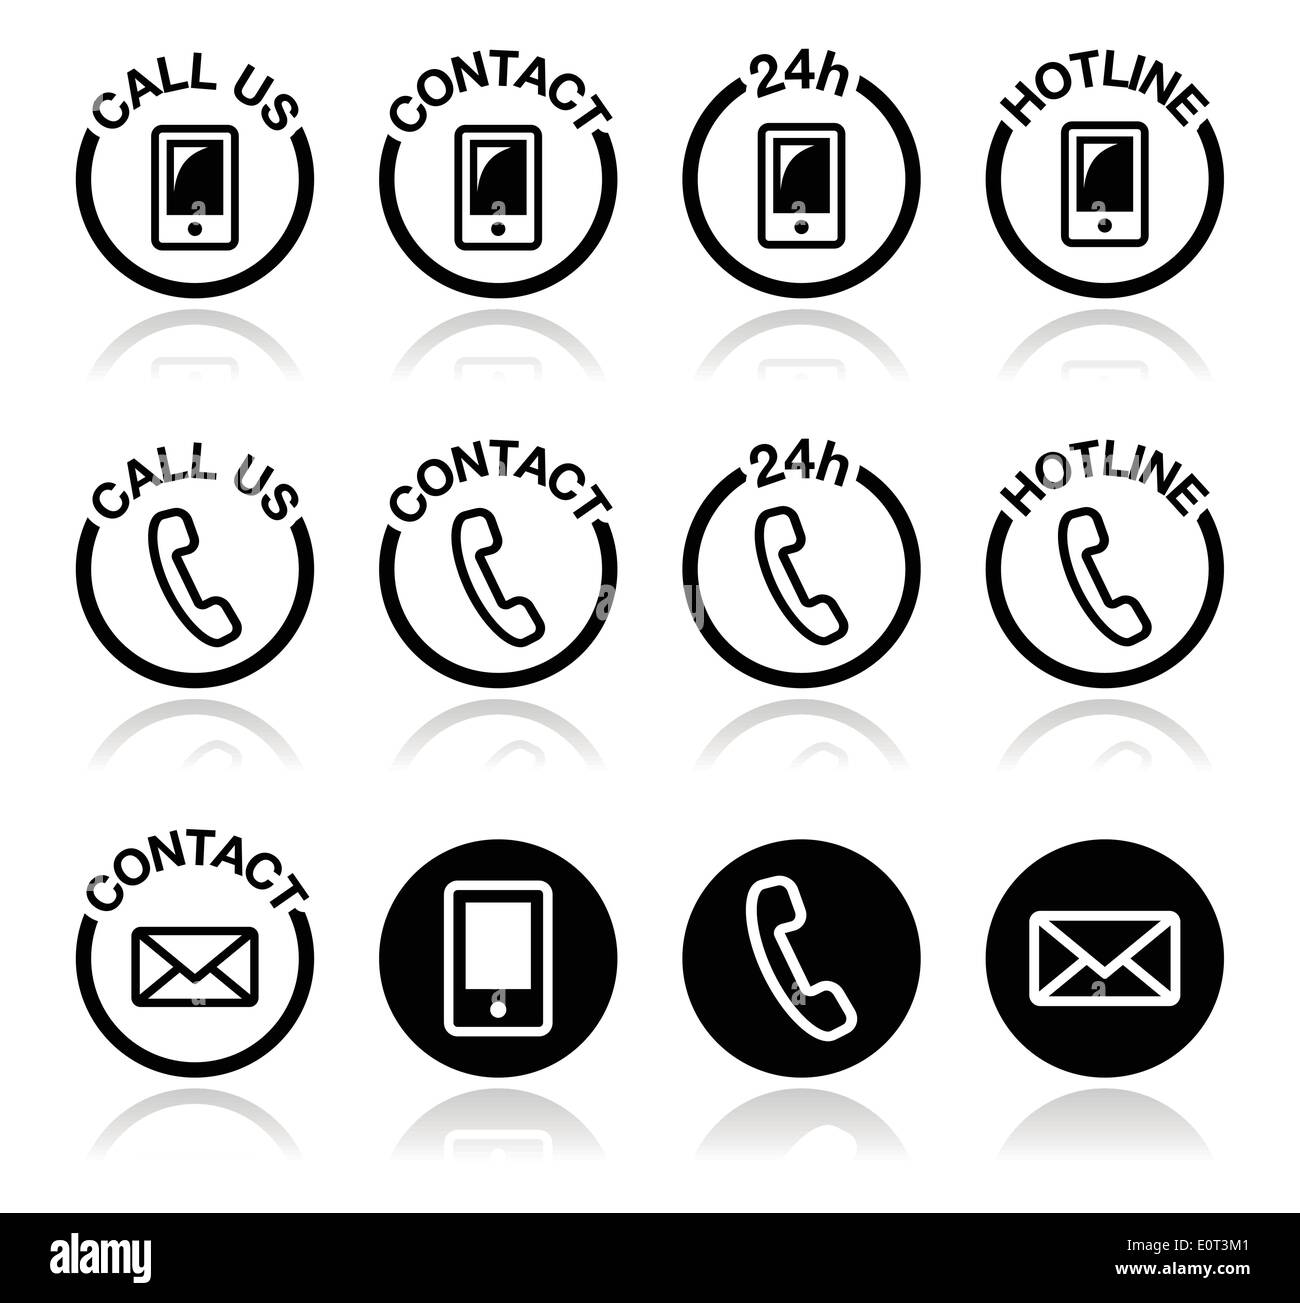 Kontakt, Hotline, 24h Hilfe Icons set Stock Vektor